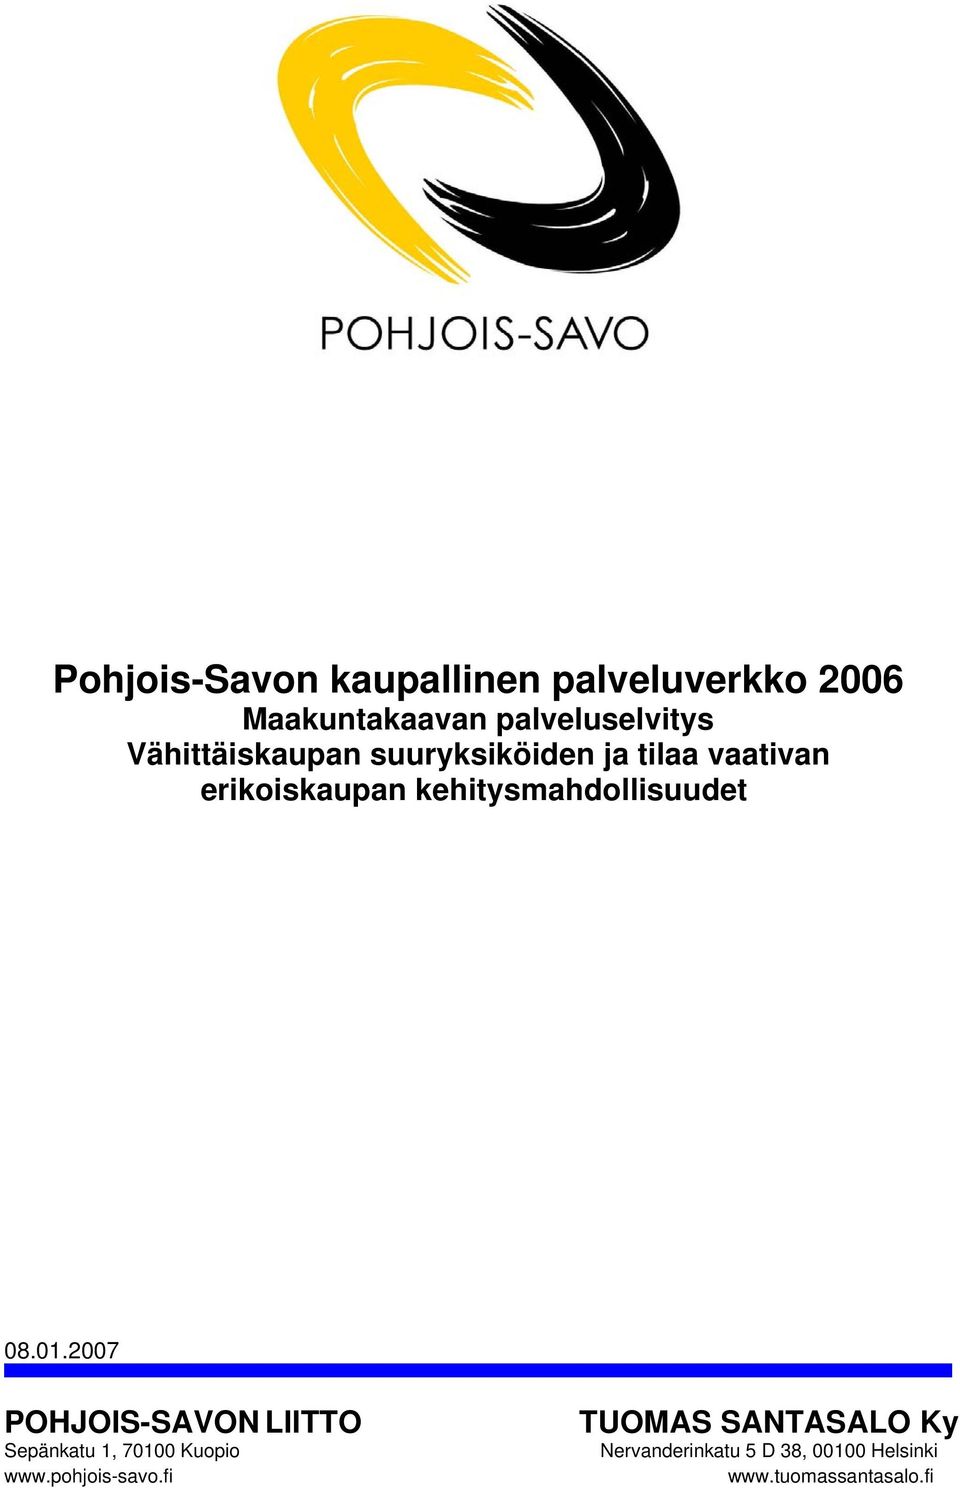 2007 POHJOIS-SAVON LIITTO TUOMAS SANTASALO Ky Sepänkatu 1, 70100